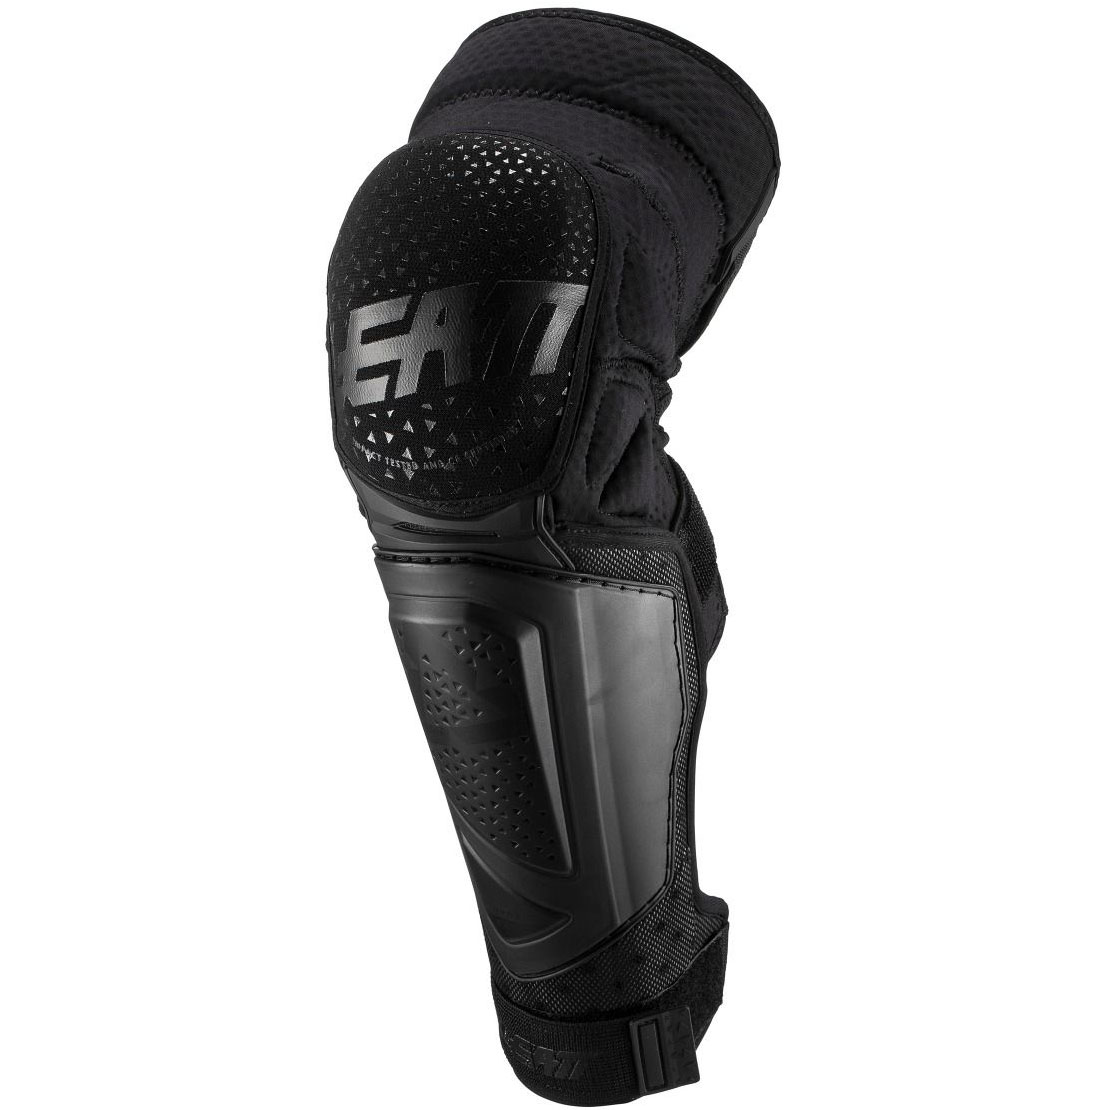 Leatt 3DF Hybrid EXT Knee & Shin Guard Black защита колен